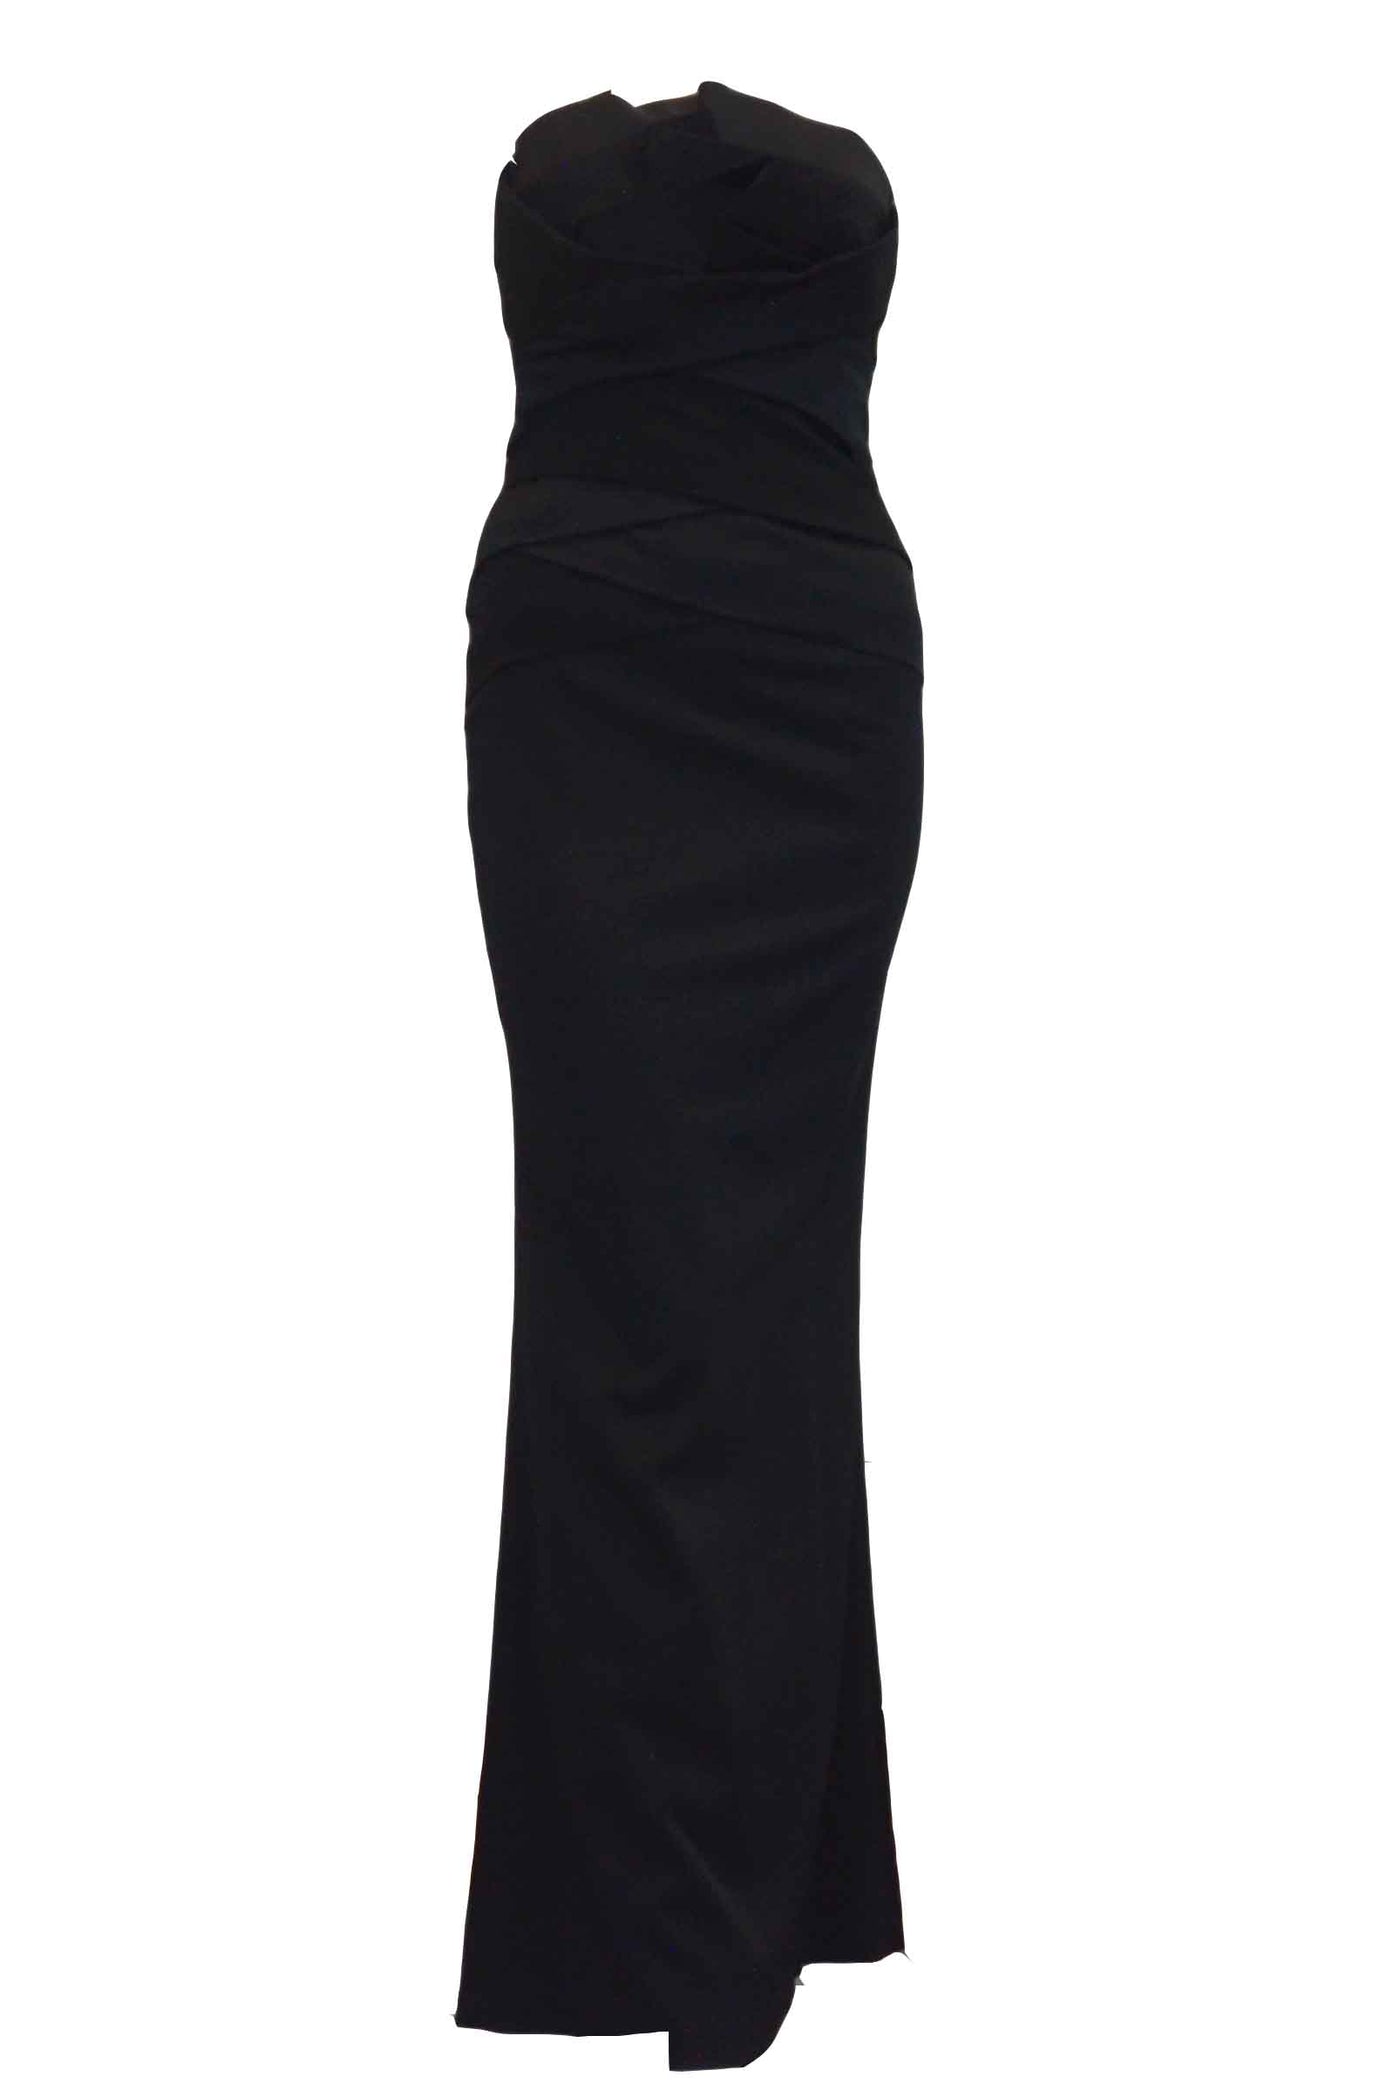 Coast London - Black Strapless Pleated Long Dress – Dresscodes